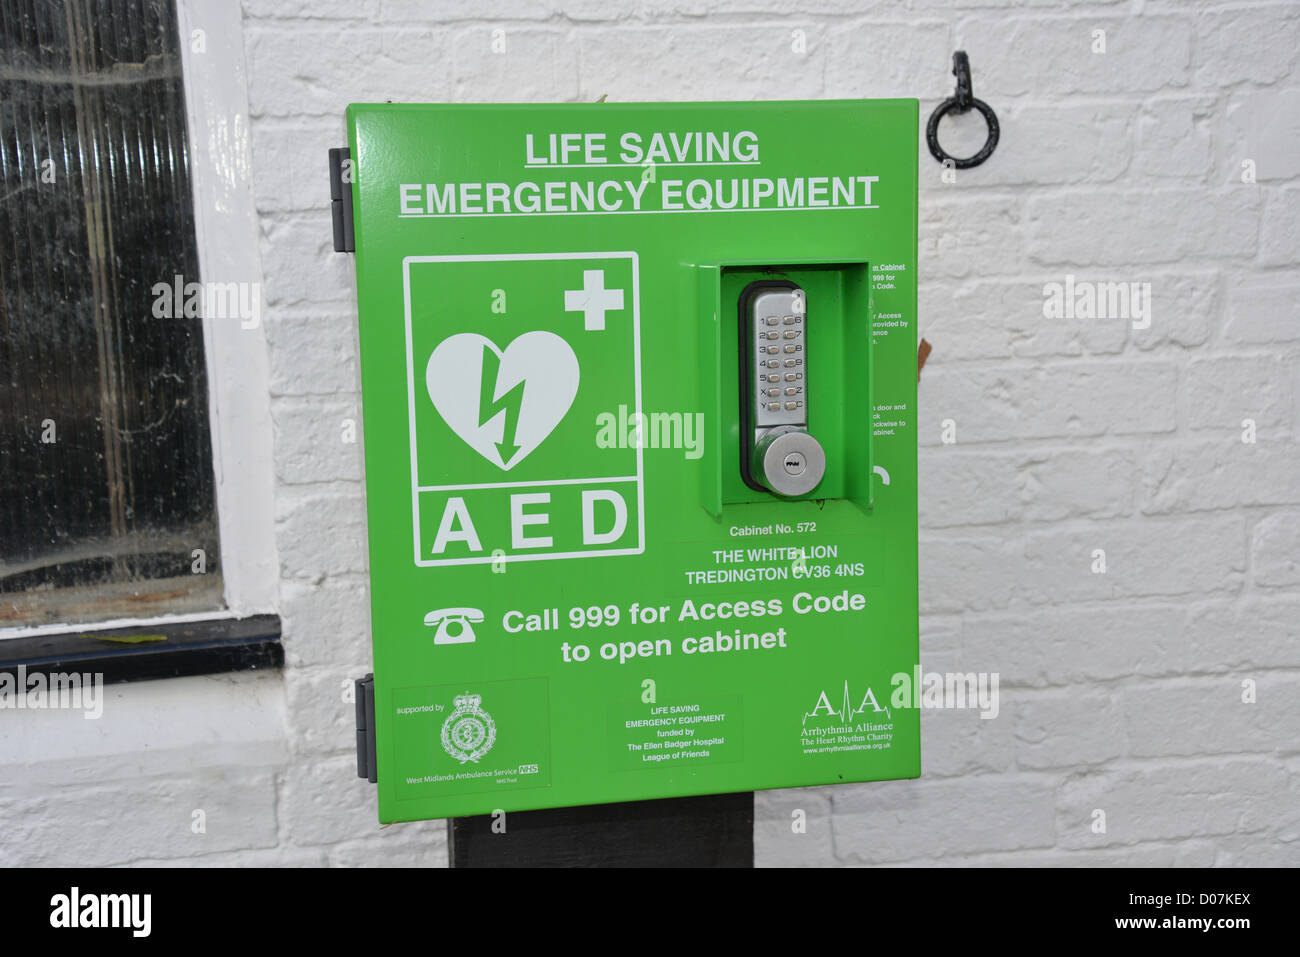 An automated external defibrillator (AED) live saving emergency equipment, Tredington, Warwickshire, England, United Kingdom Stock Photo